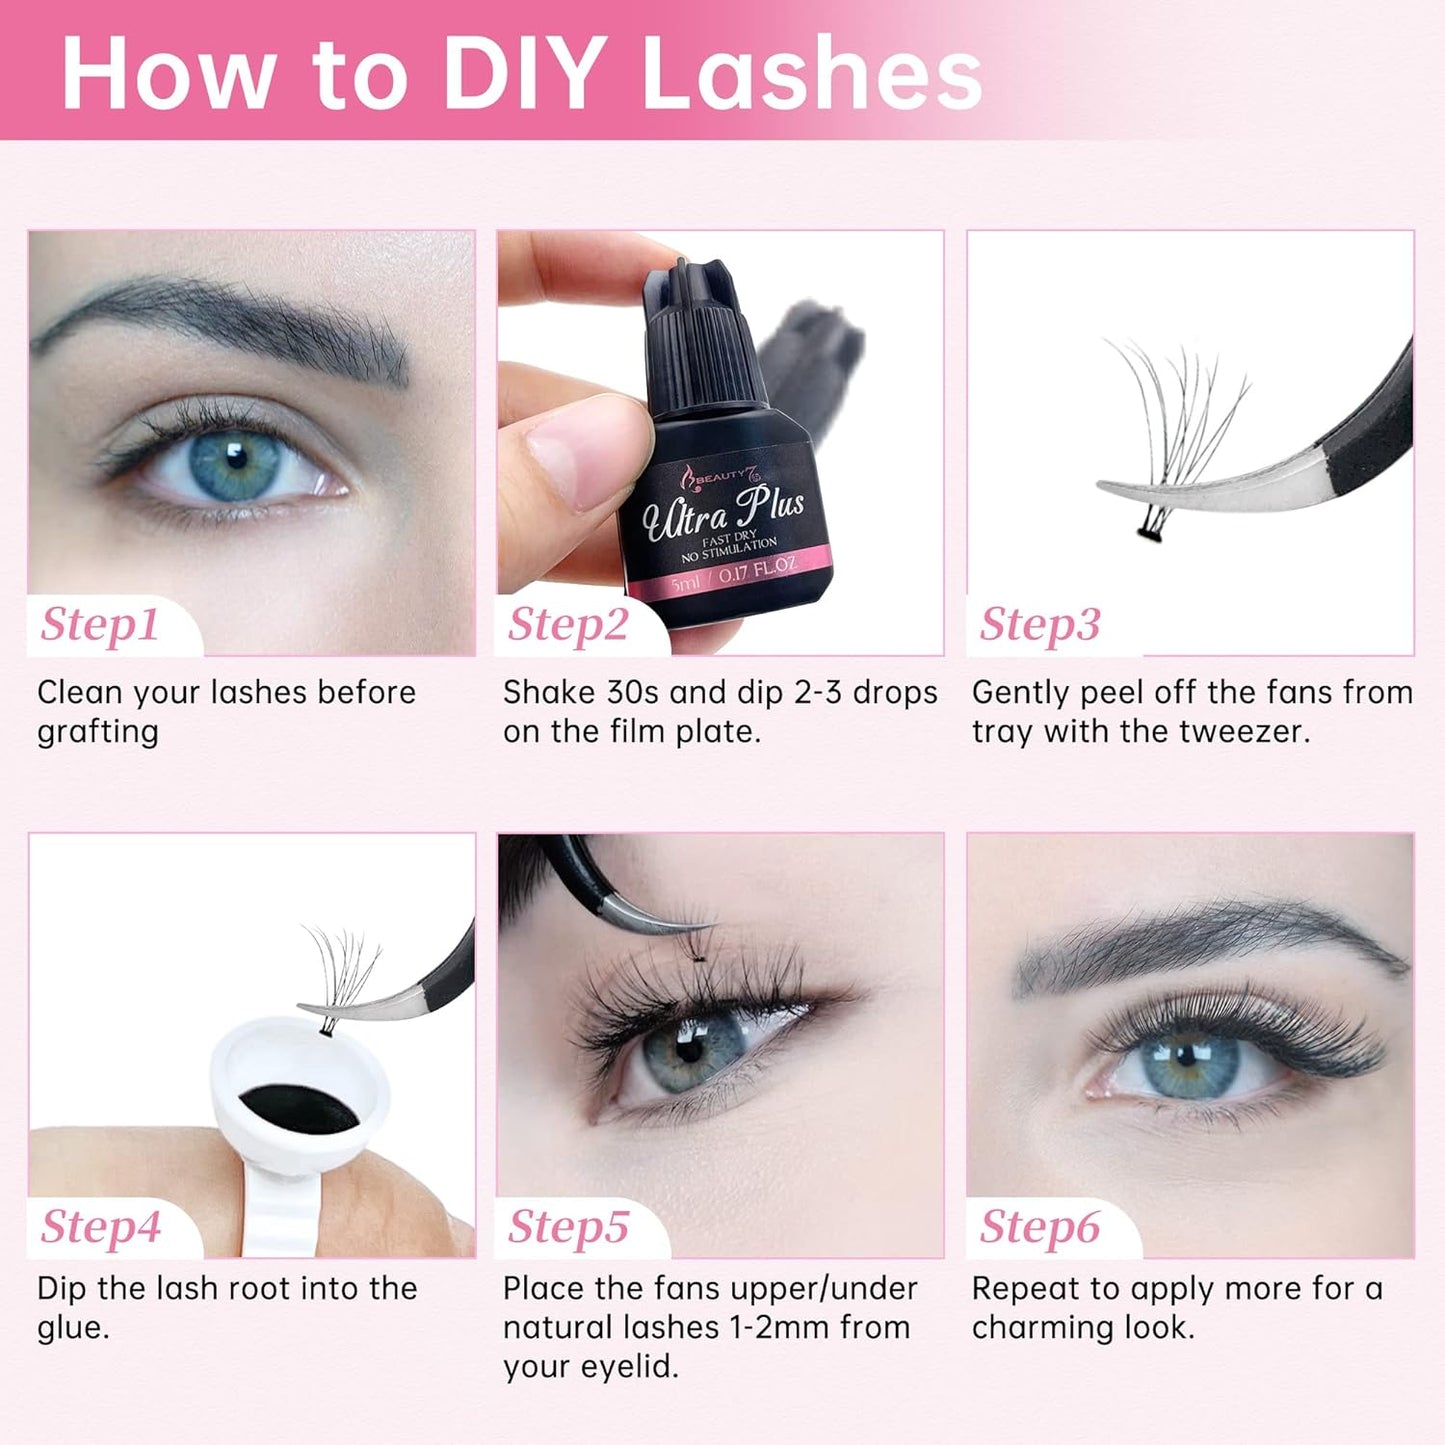 Beauty7 DIY Eyelash Extension Kit Lash Kit for Self Application Eyelash Glue Cream Remover Cluster Lashes Tweezer at Home Lash Extensions for Individuals (10D KIT)